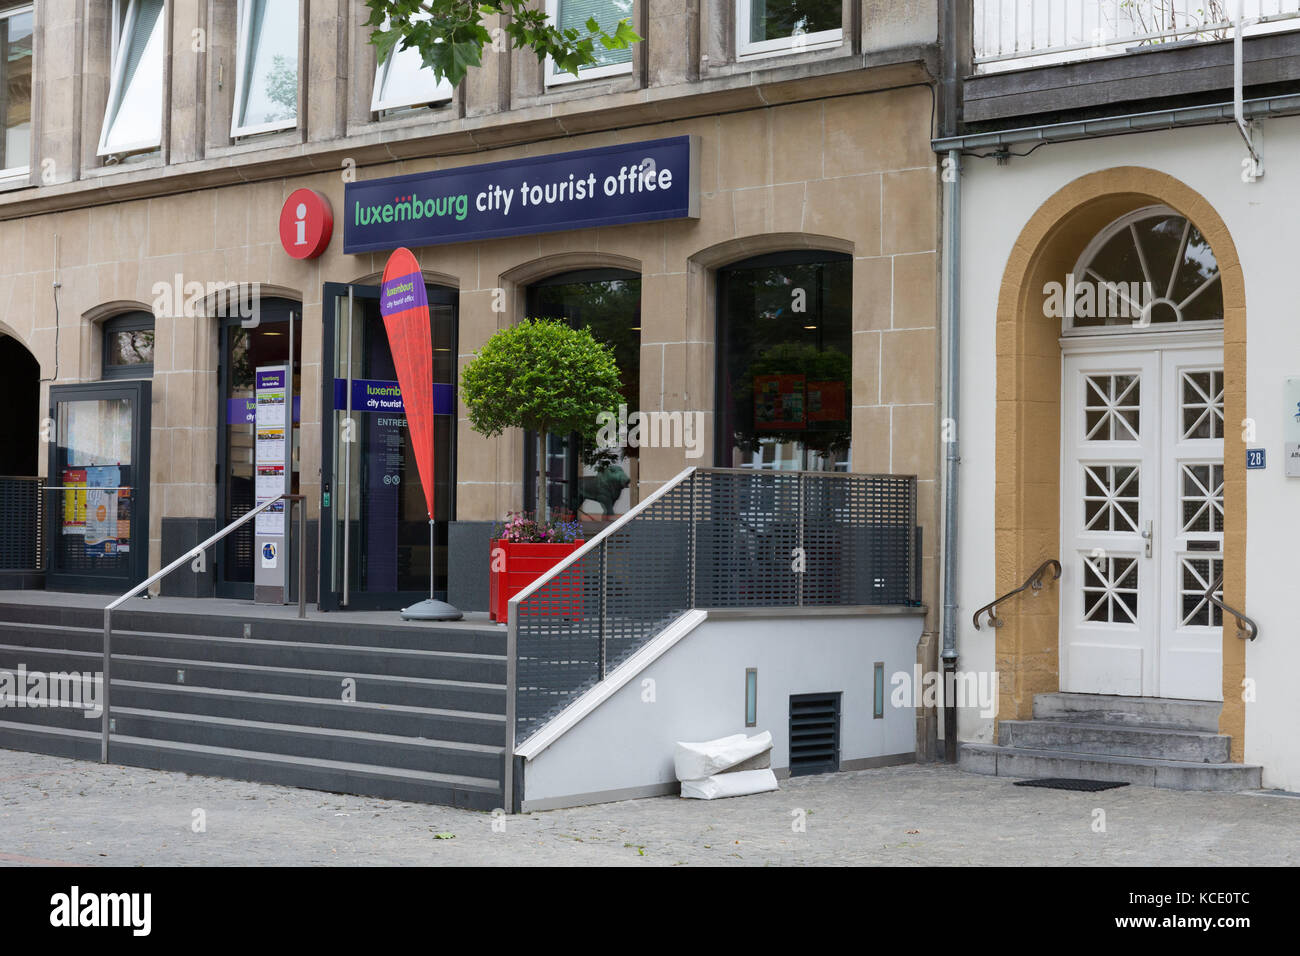 Luxembourg City tourist office Stock Photo - Alamy